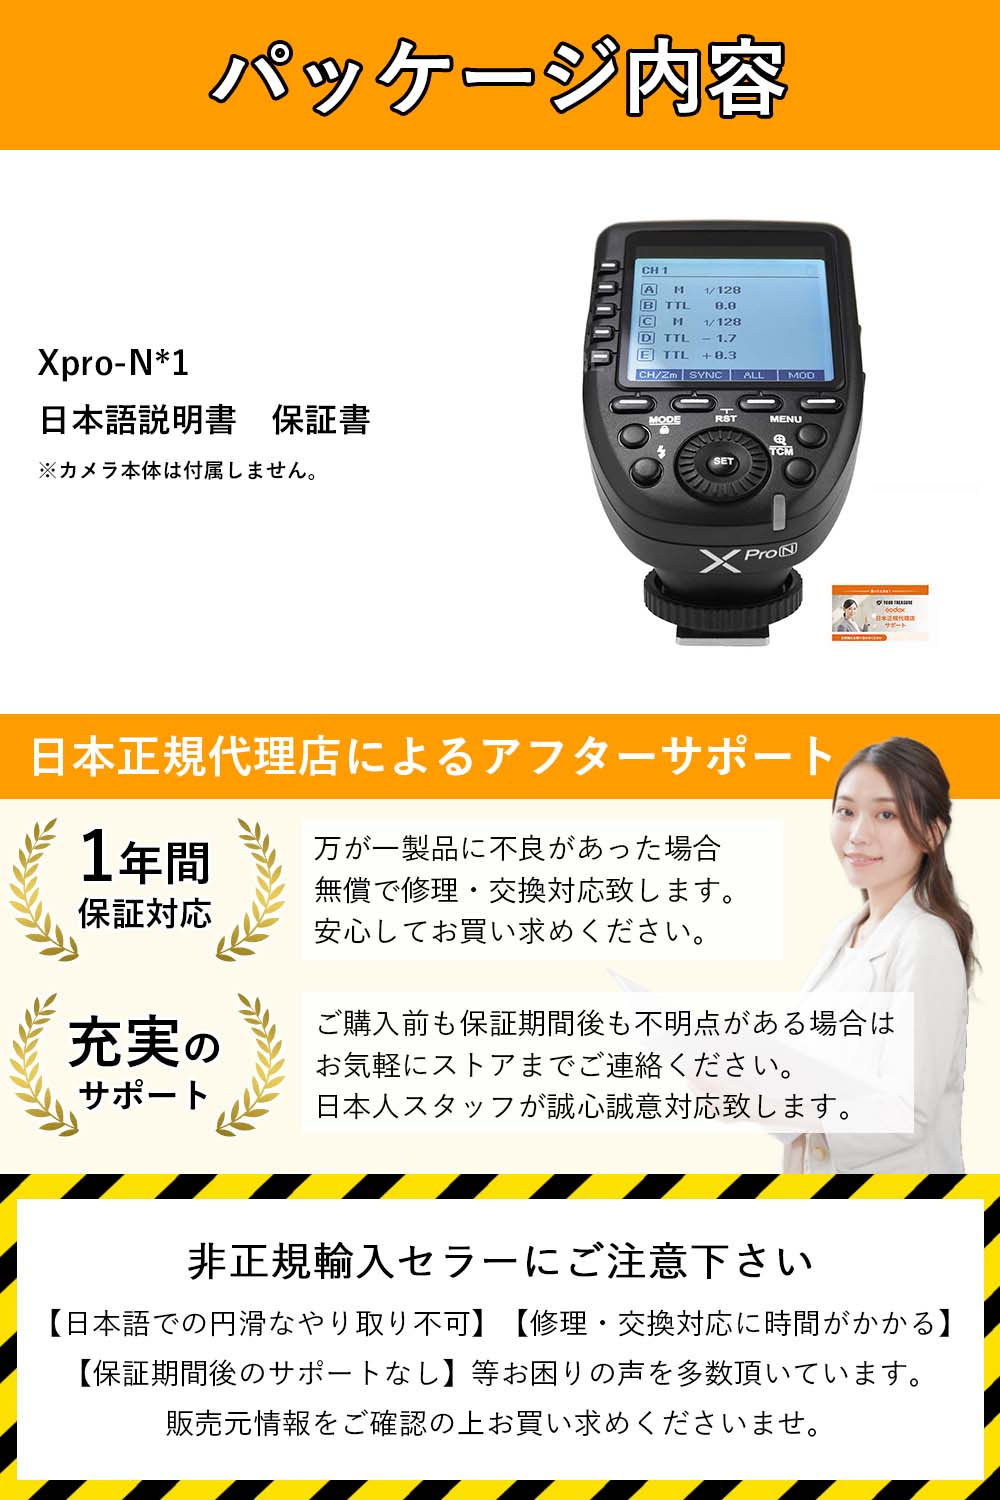 Godox Xpro-N  XproN フラッシュトリガー Nikon ニコン対応 TTL 2.4G 1/8000s HSS 送信機